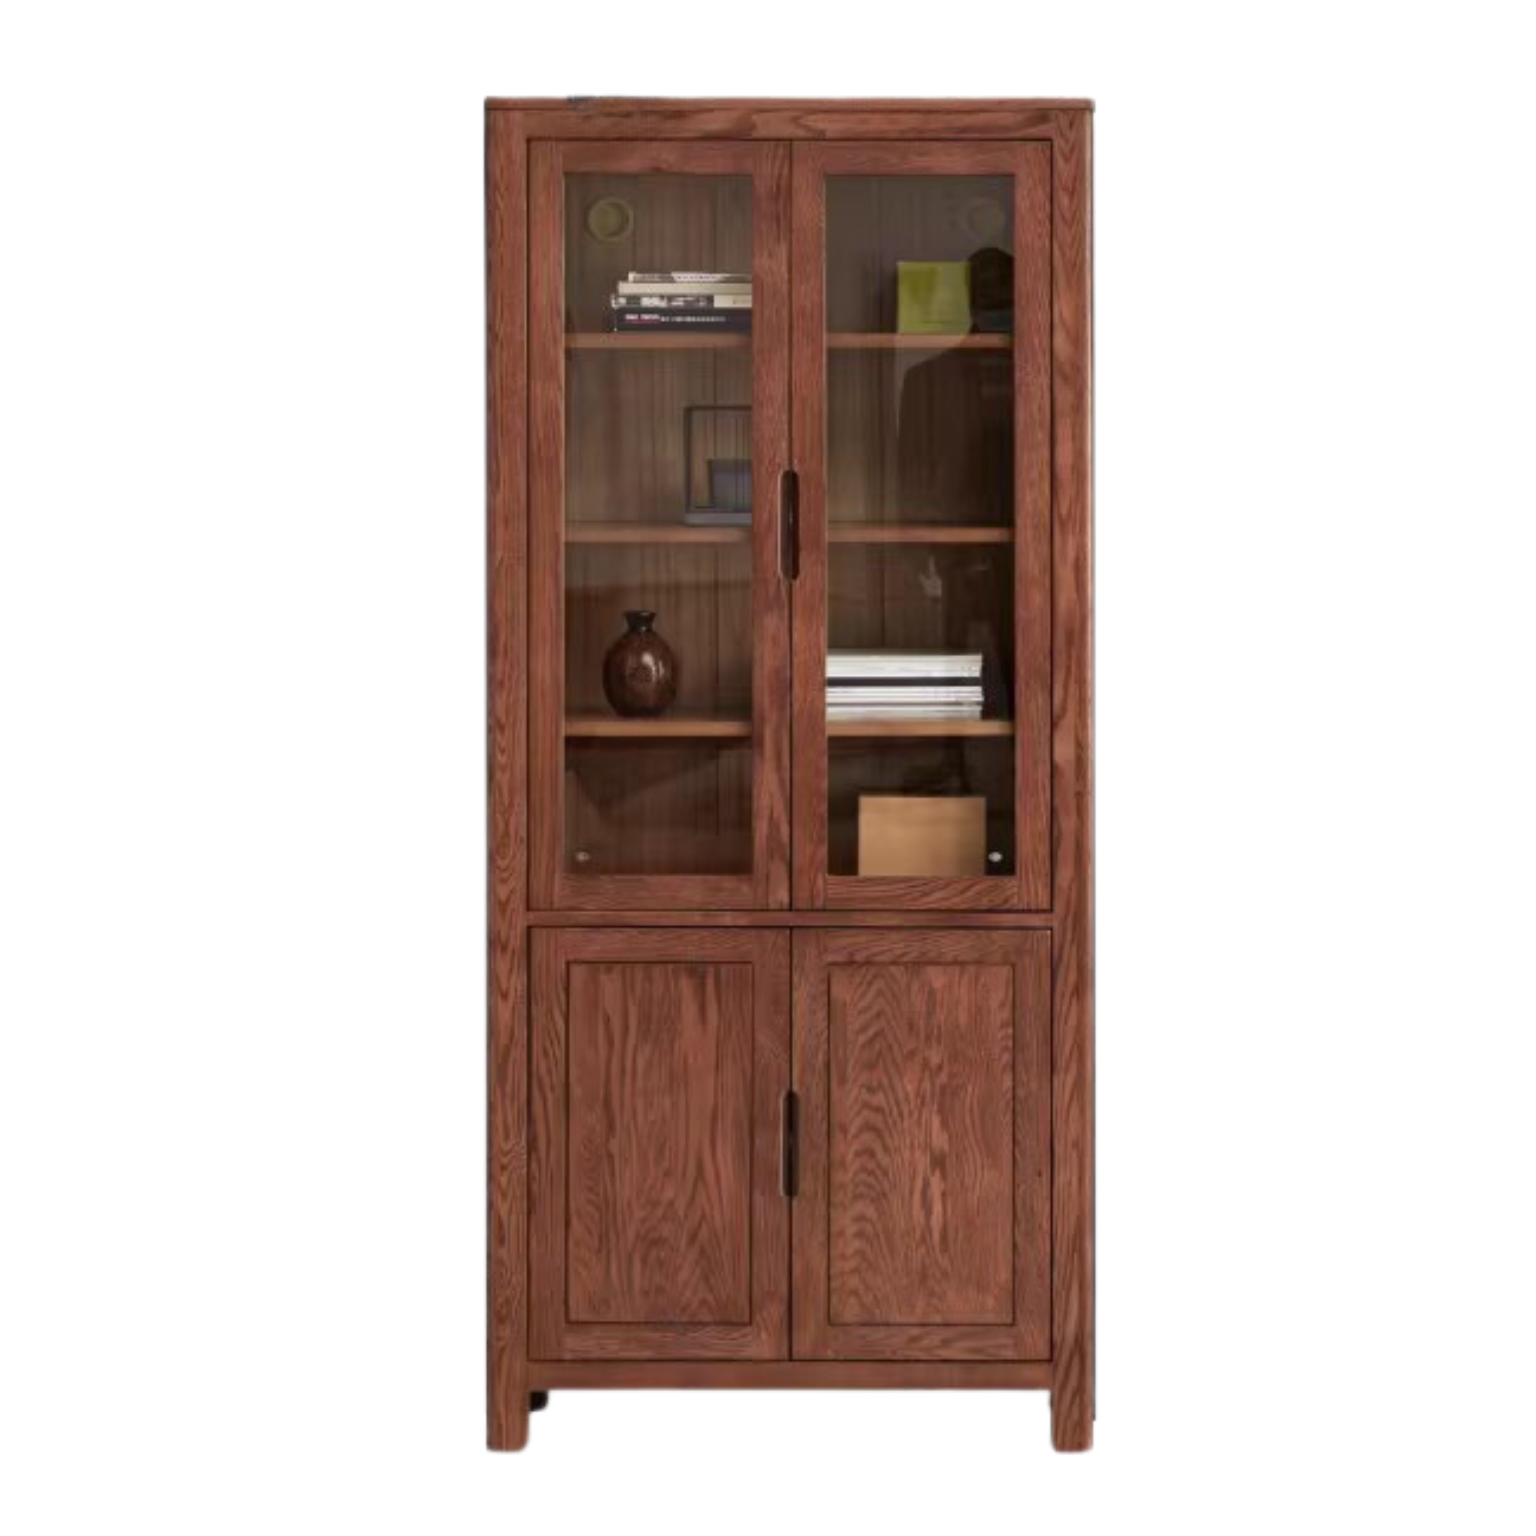 Oak solid wood Bookcase combination -